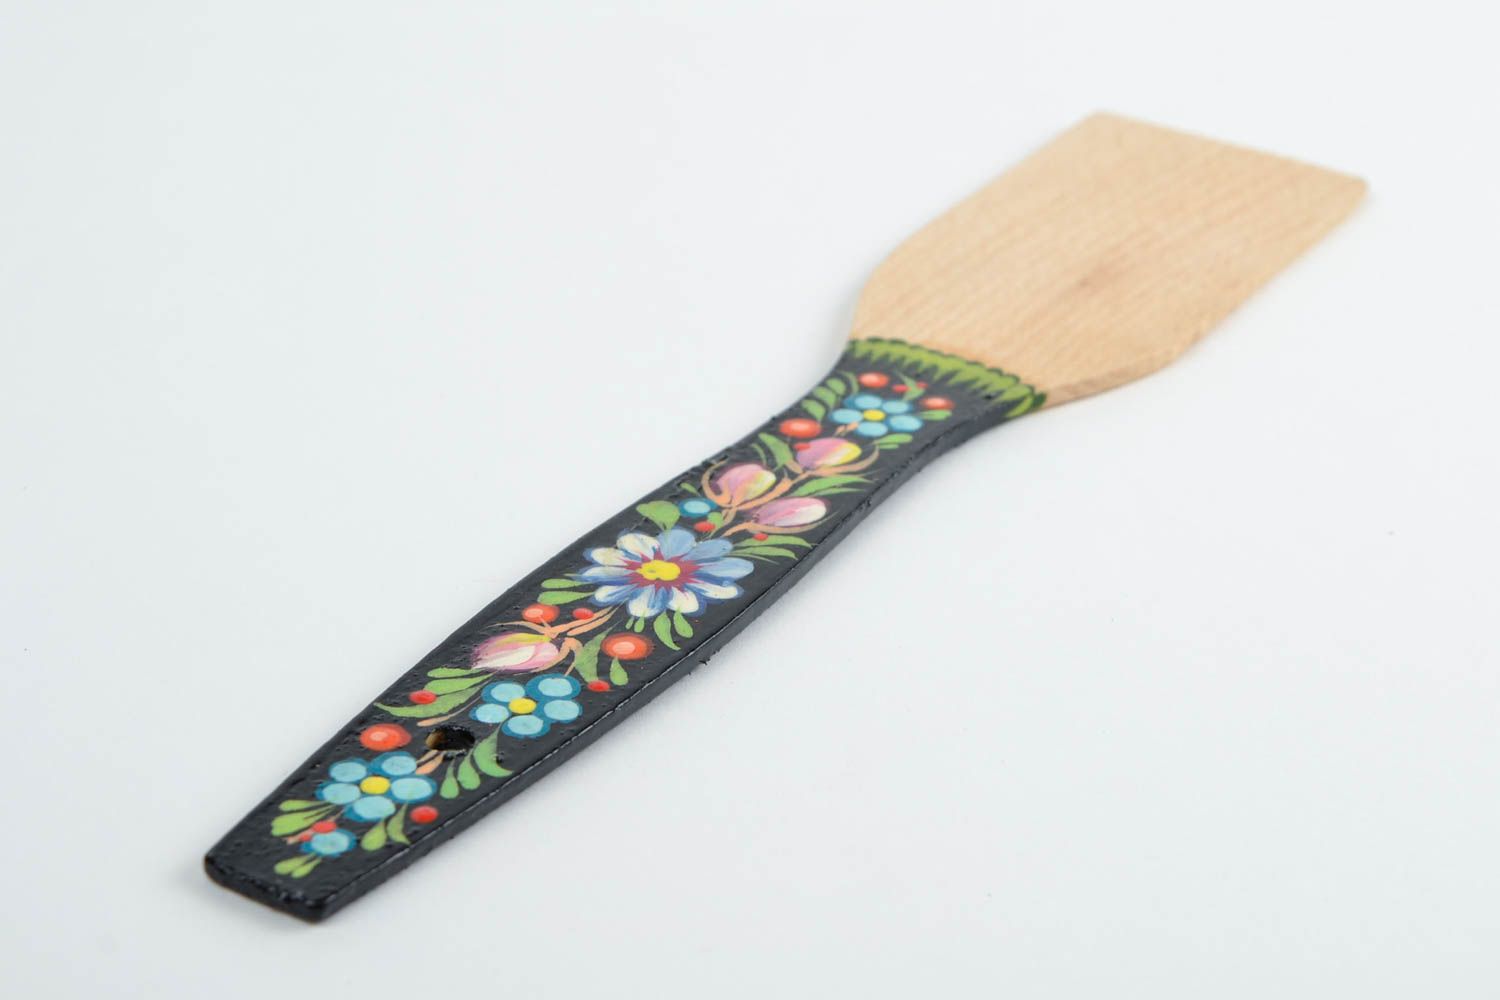 Handmade wooden spatula designer Petrykivka painting kitchen tool ethnic decor photo 4